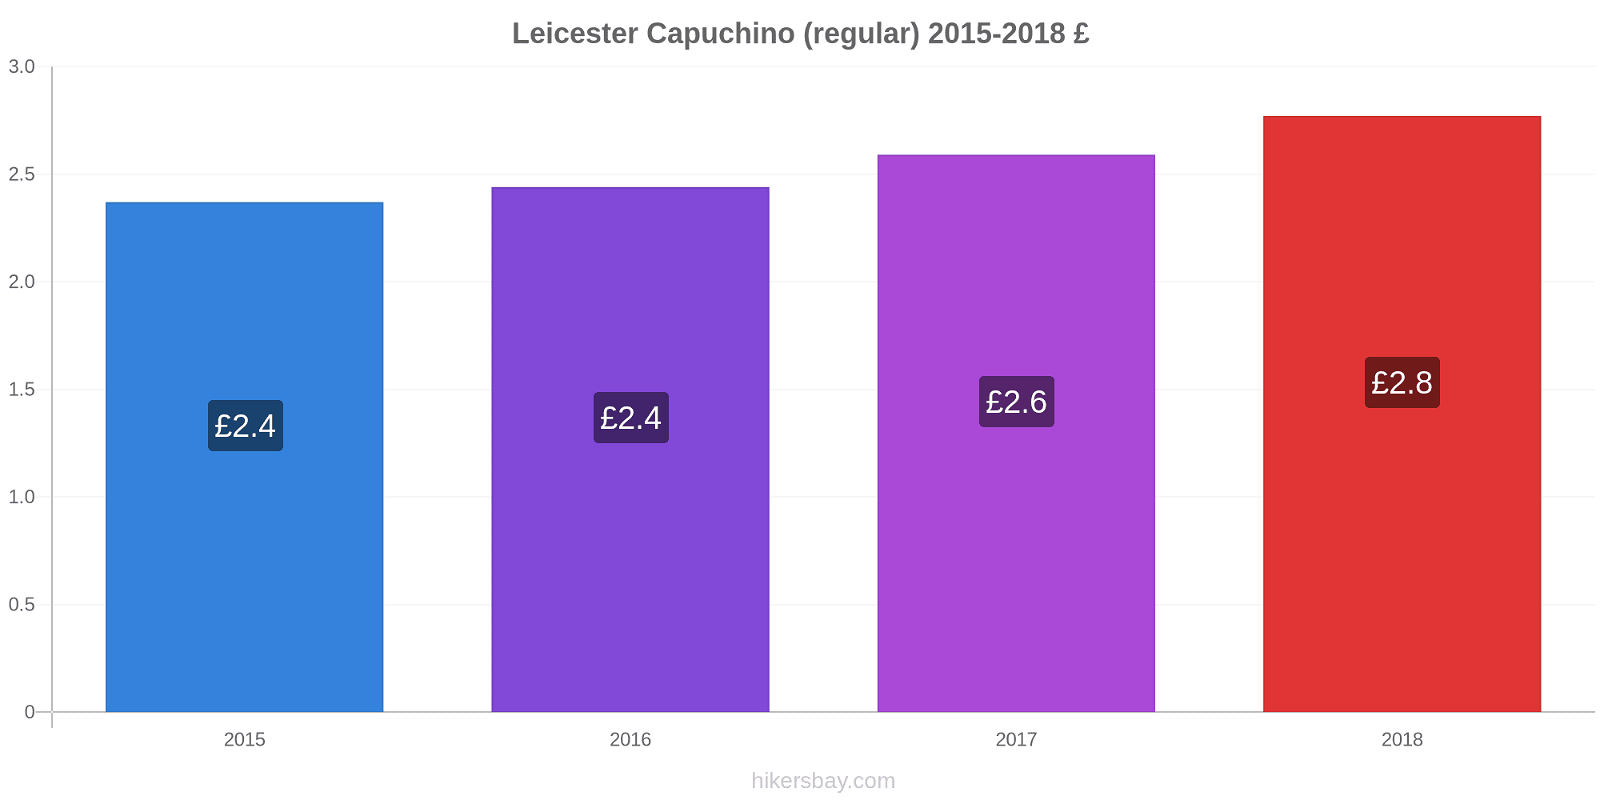 Leicester cambios de precios Capuchino (regular) hikersbay.com